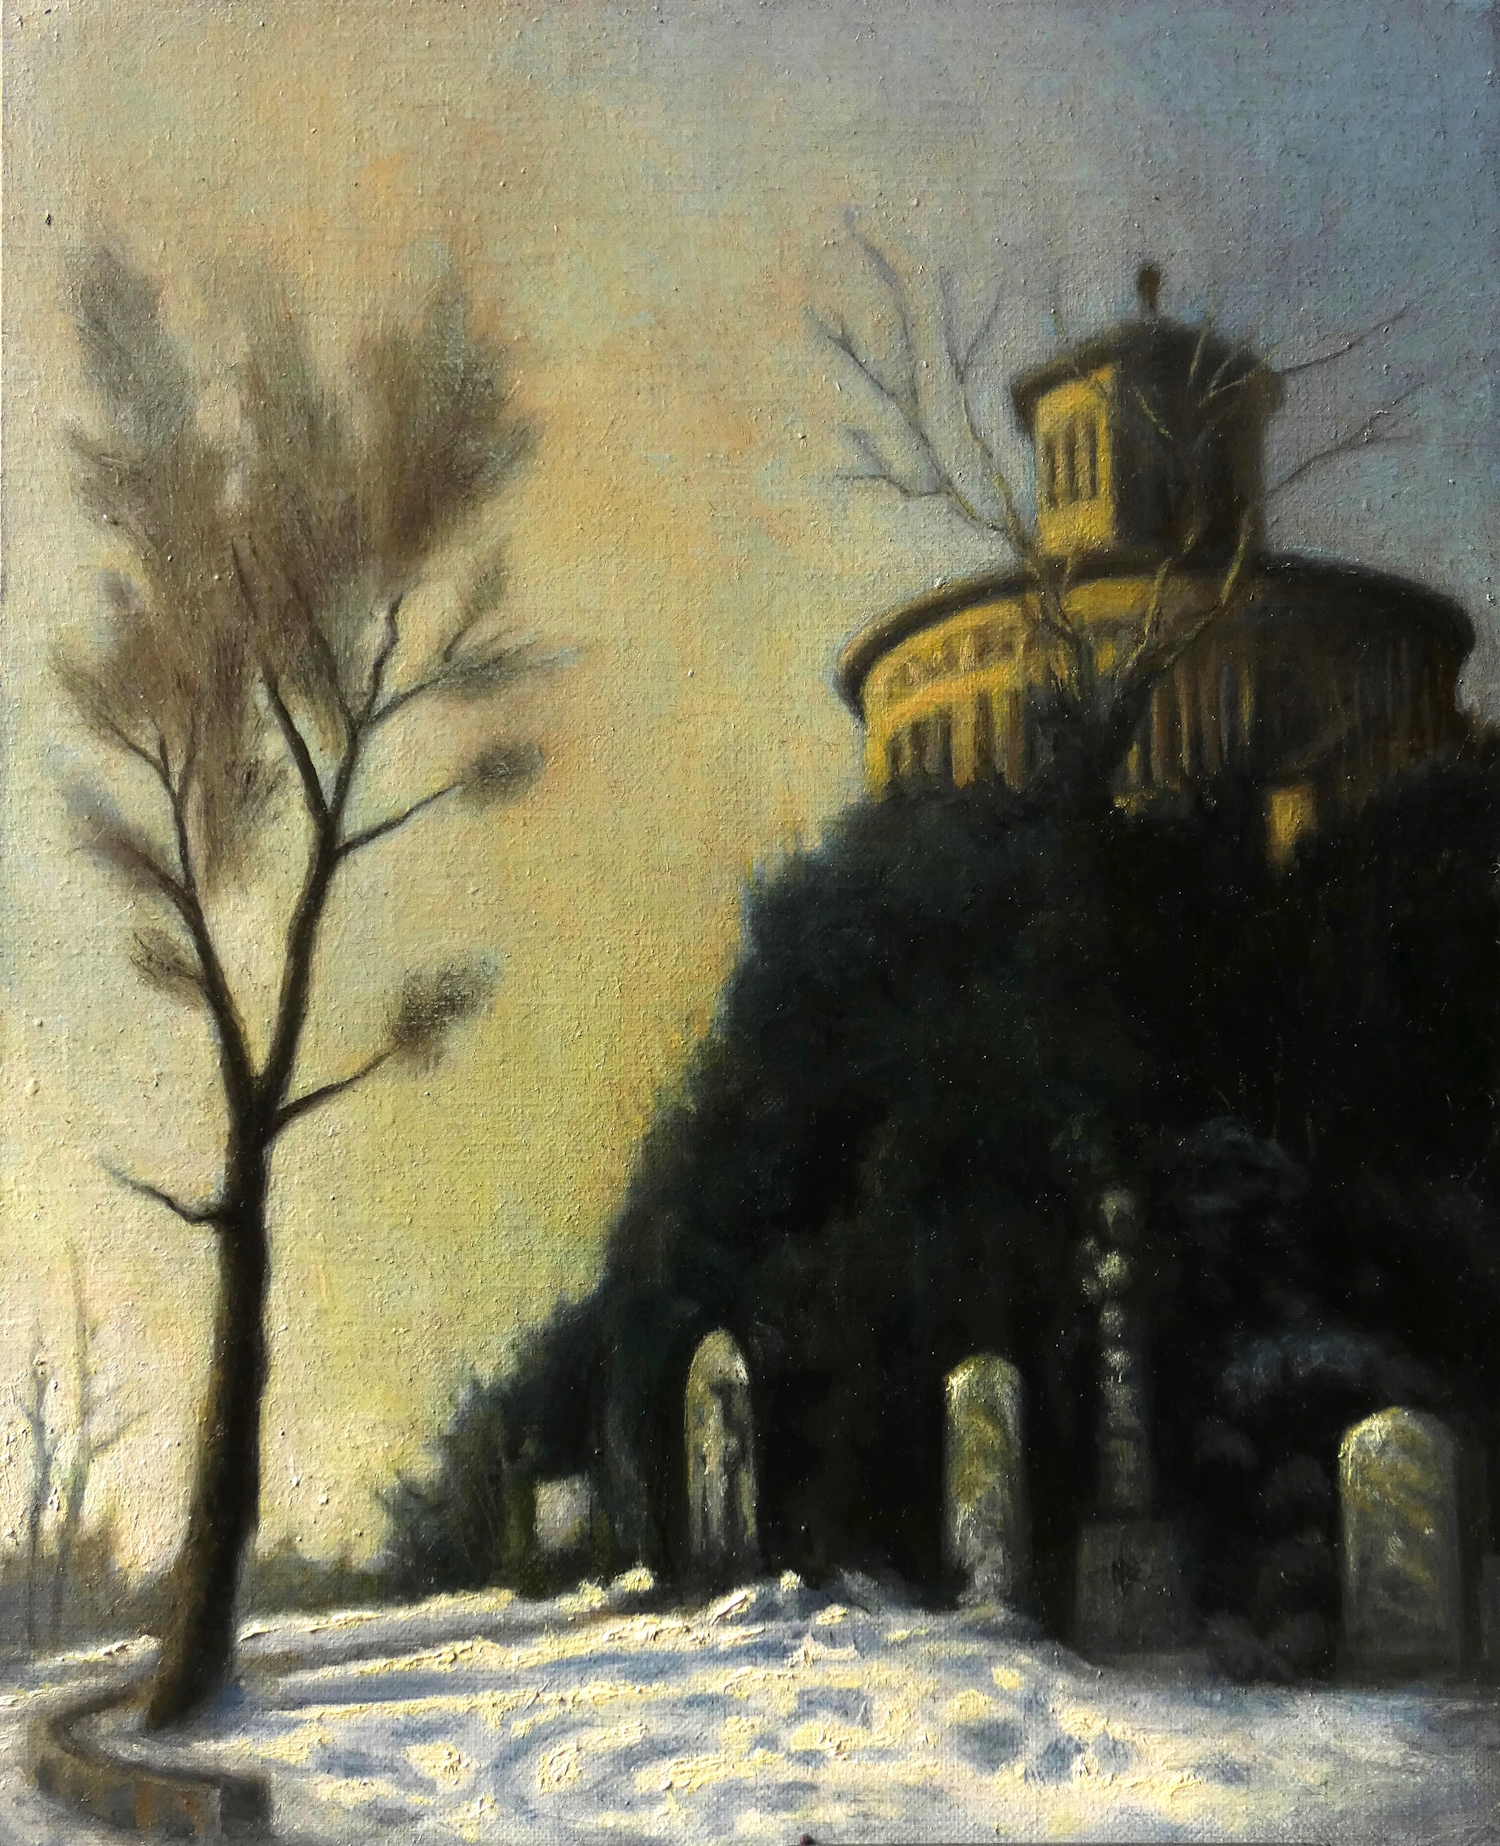 'Winter Sunset at the Necropolis' by artist Davide Bozzetti Zirpoli